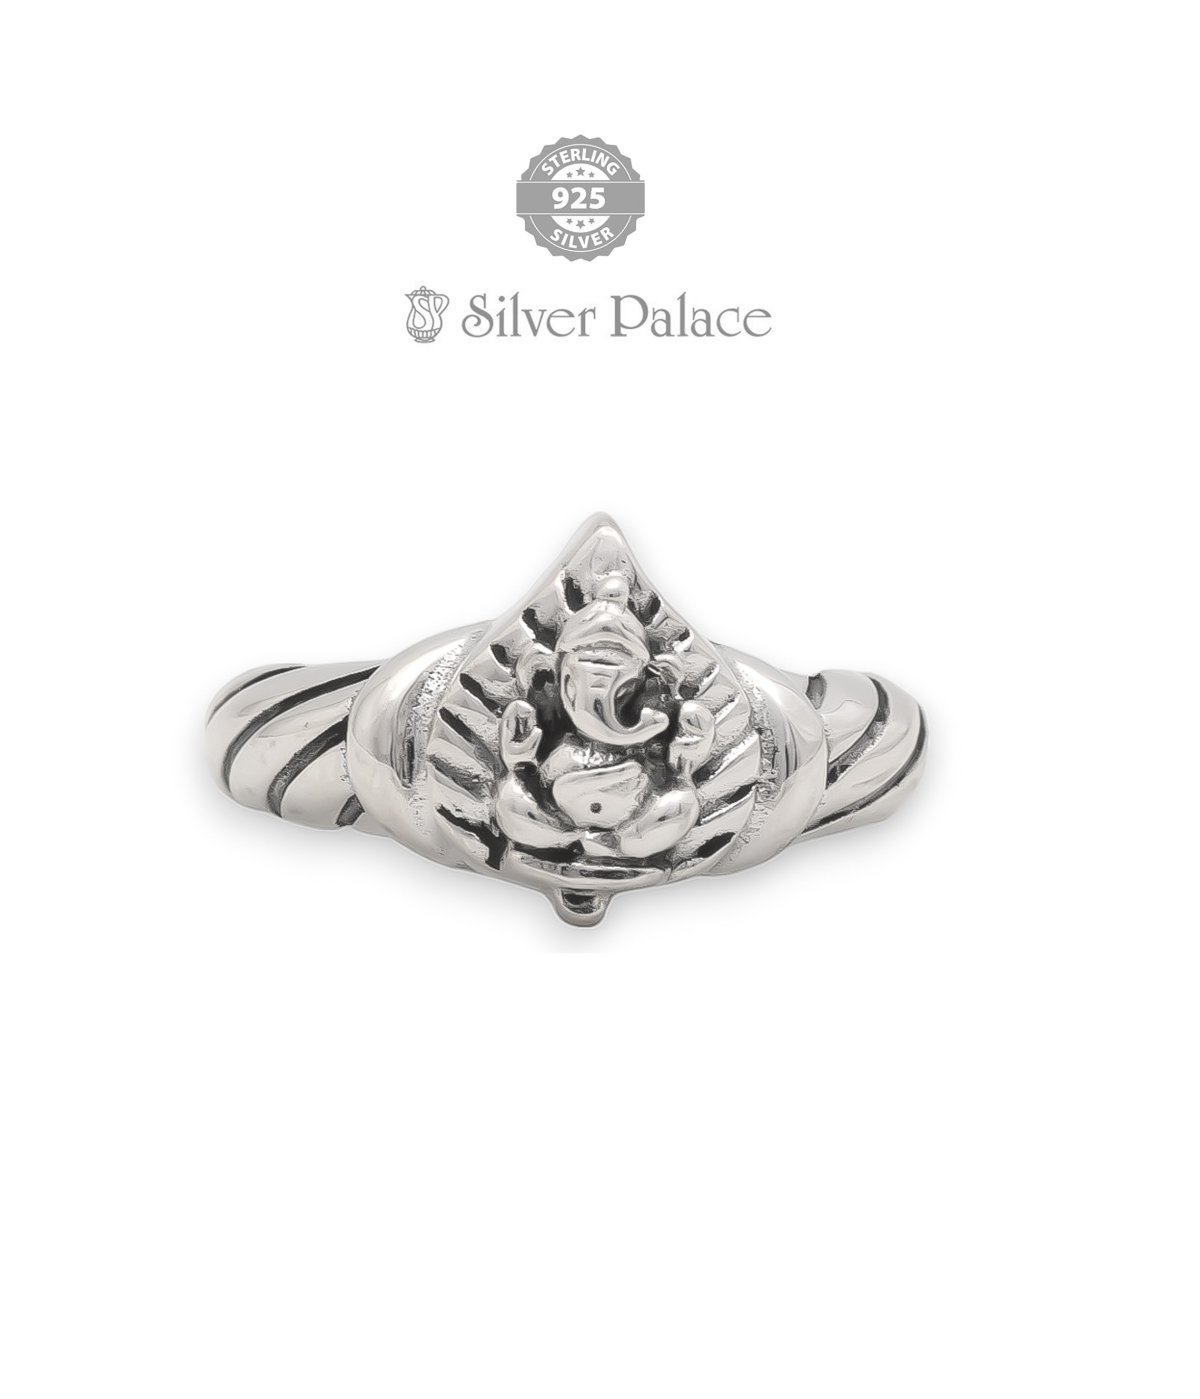 92.5 SILVER Divine Collctions Ganesha with leaf Design Rings For Men